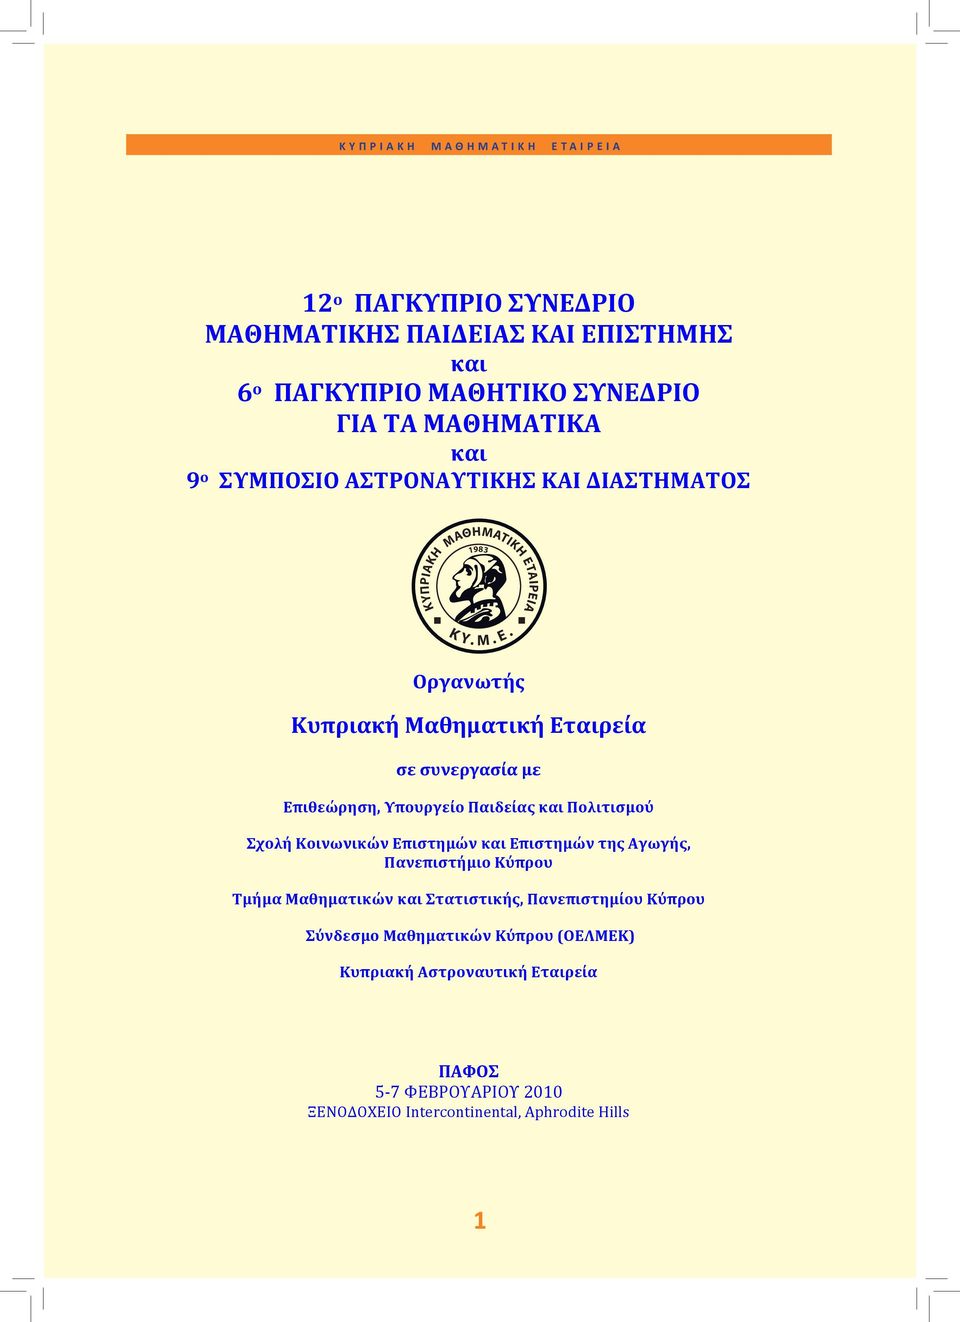 . E Οργανωτής Κυπριακή Μαθηματική Εταιρεία σε συνεργασία με Επιθεώρηση, Υπουργείο Παιδείας και Πολιτισμού Σχολή Κοινωνικών Επιστημών και Επιστημών της